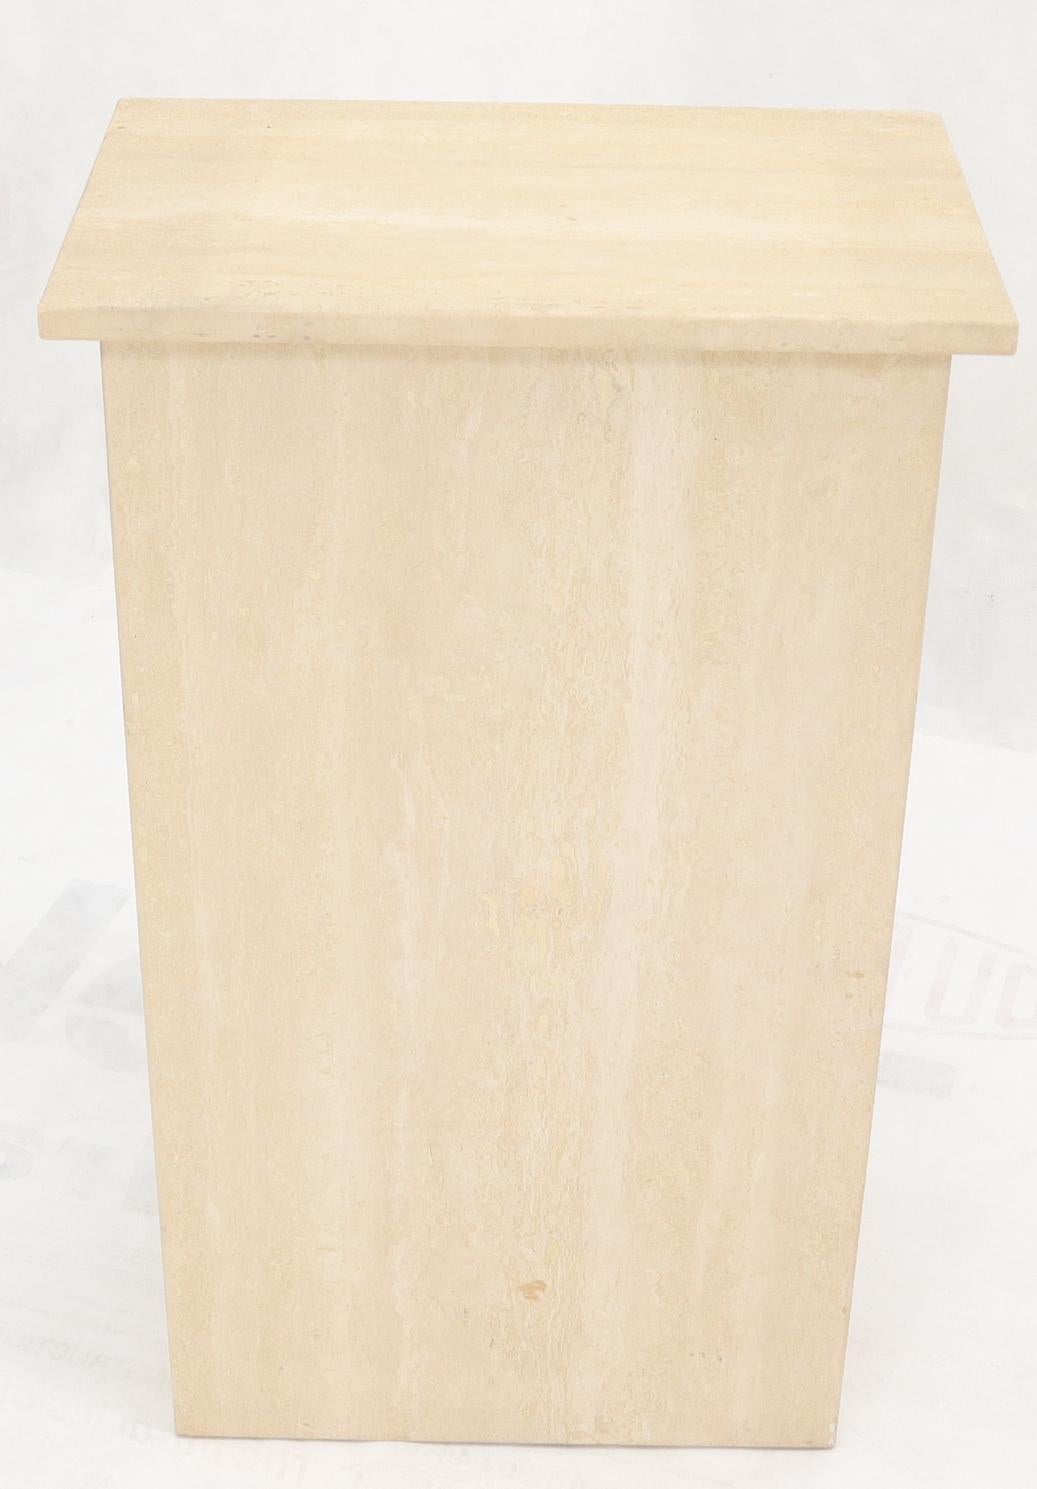 Midcentury Italian modern rectangle travertine pedestal stand. Measures: 12 x 19.